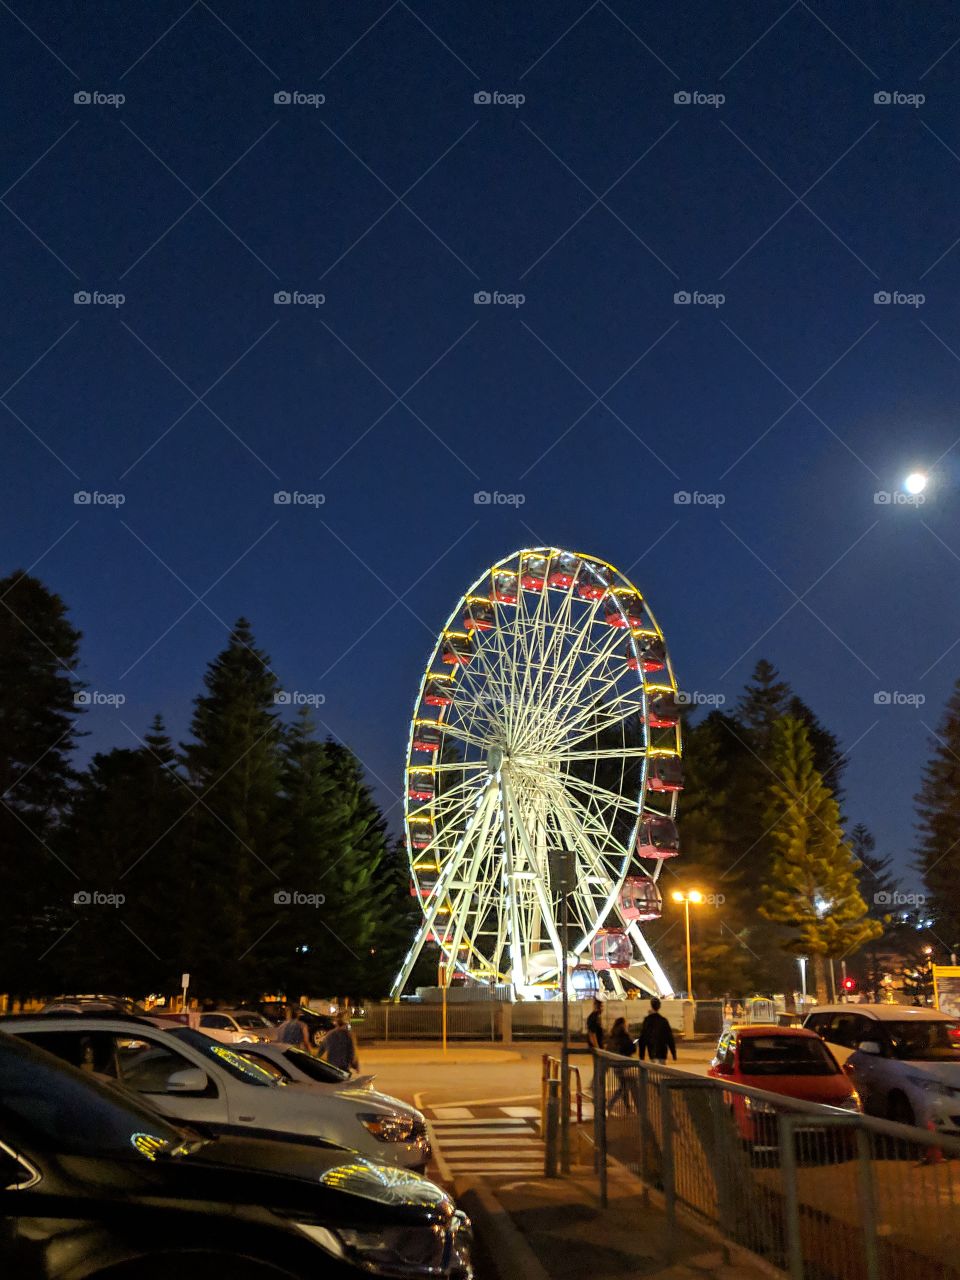 Ferris wheel under the night sky